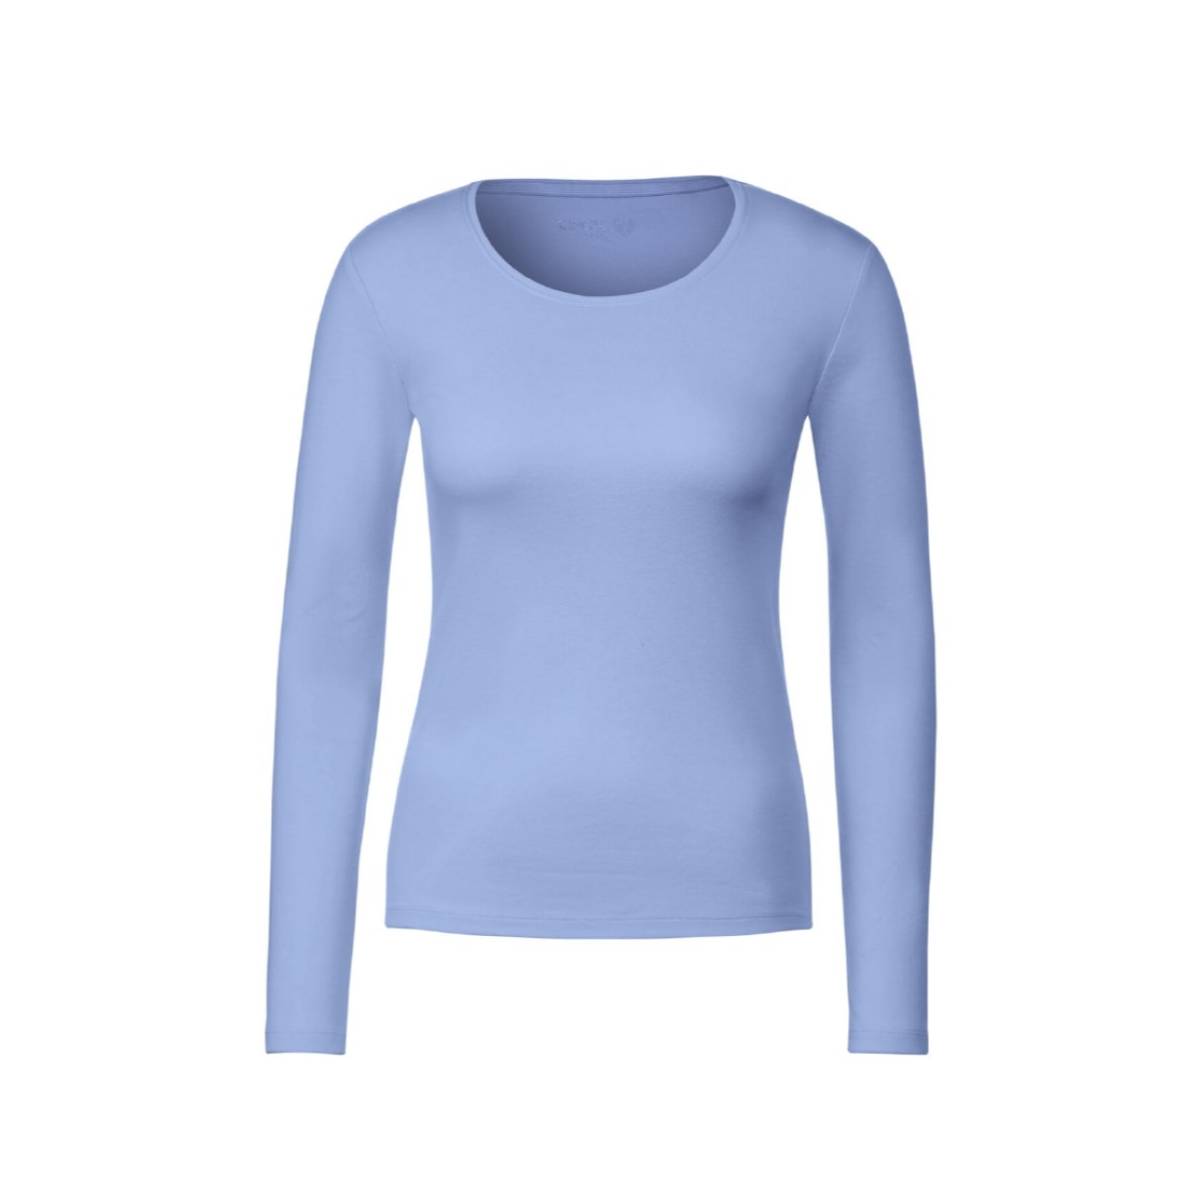 CECIL  t shirts licht blauw -  model b319820 - Dameskleding t shirts blauw